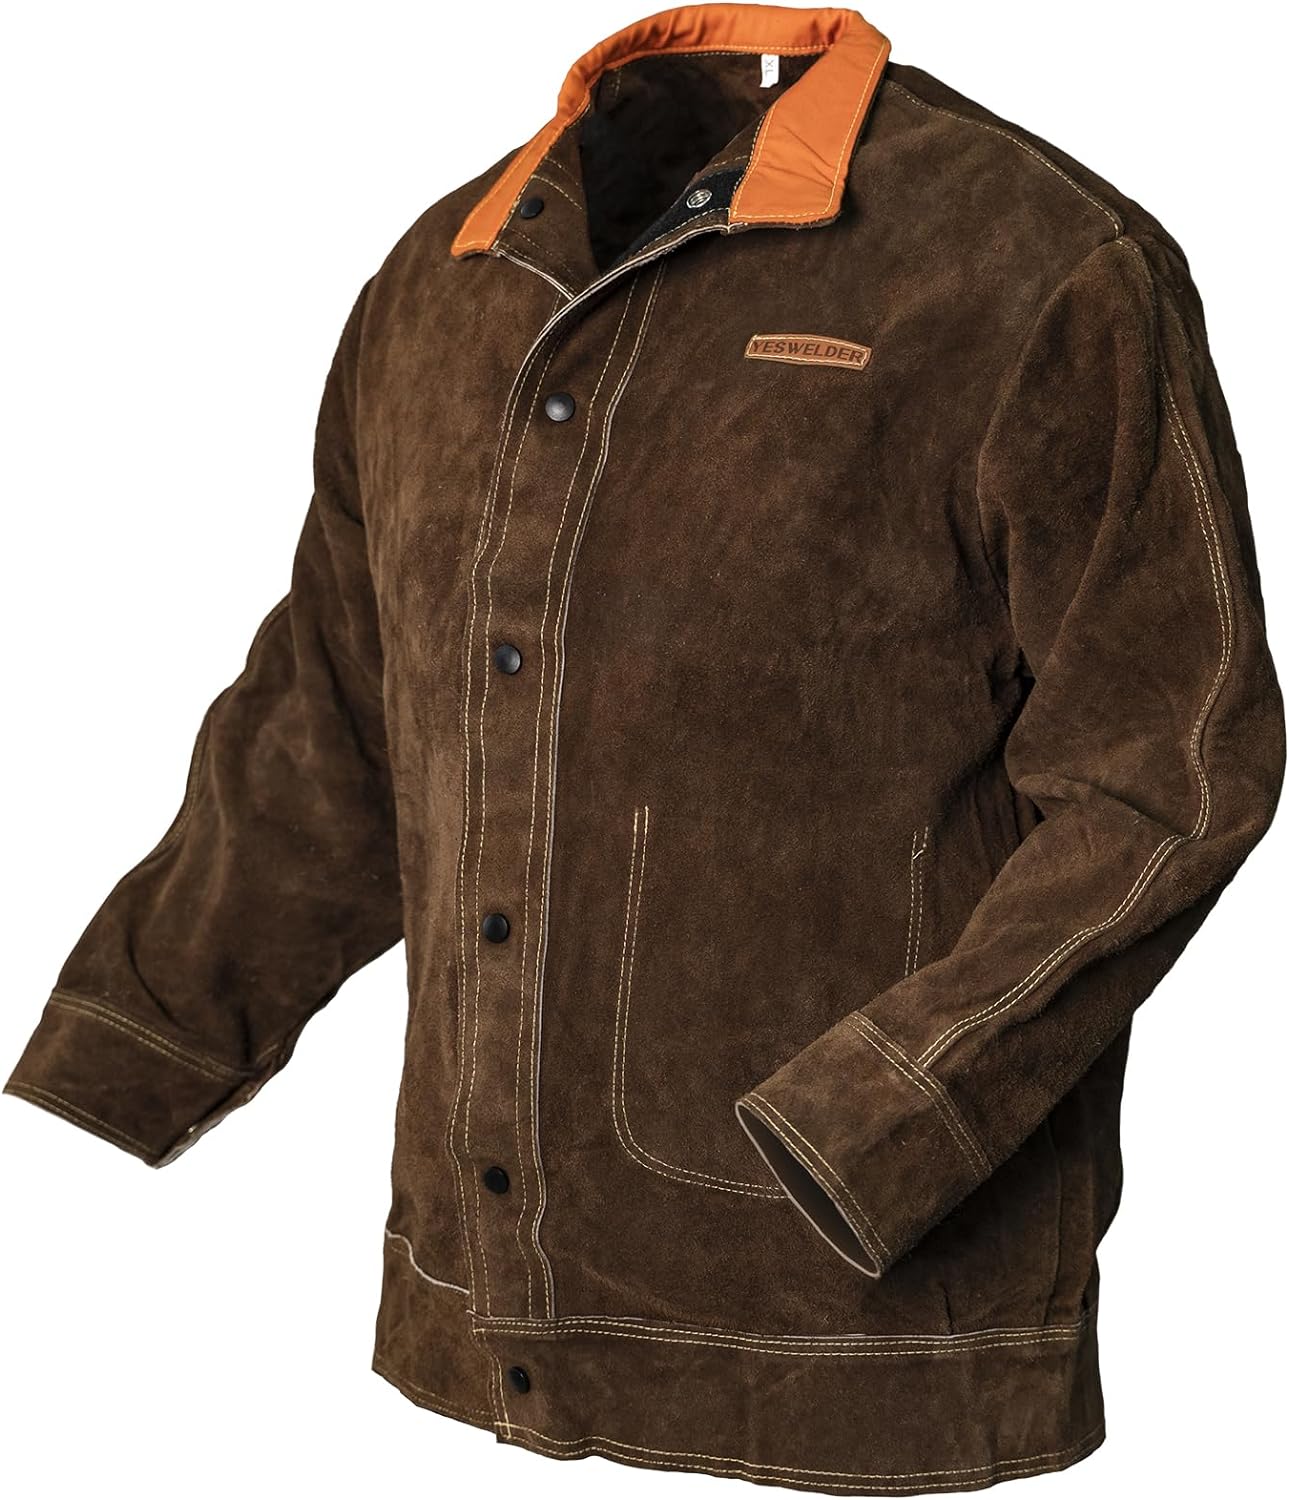 Choosing the Right Welding Jacket: A Crucial Gear for Welders